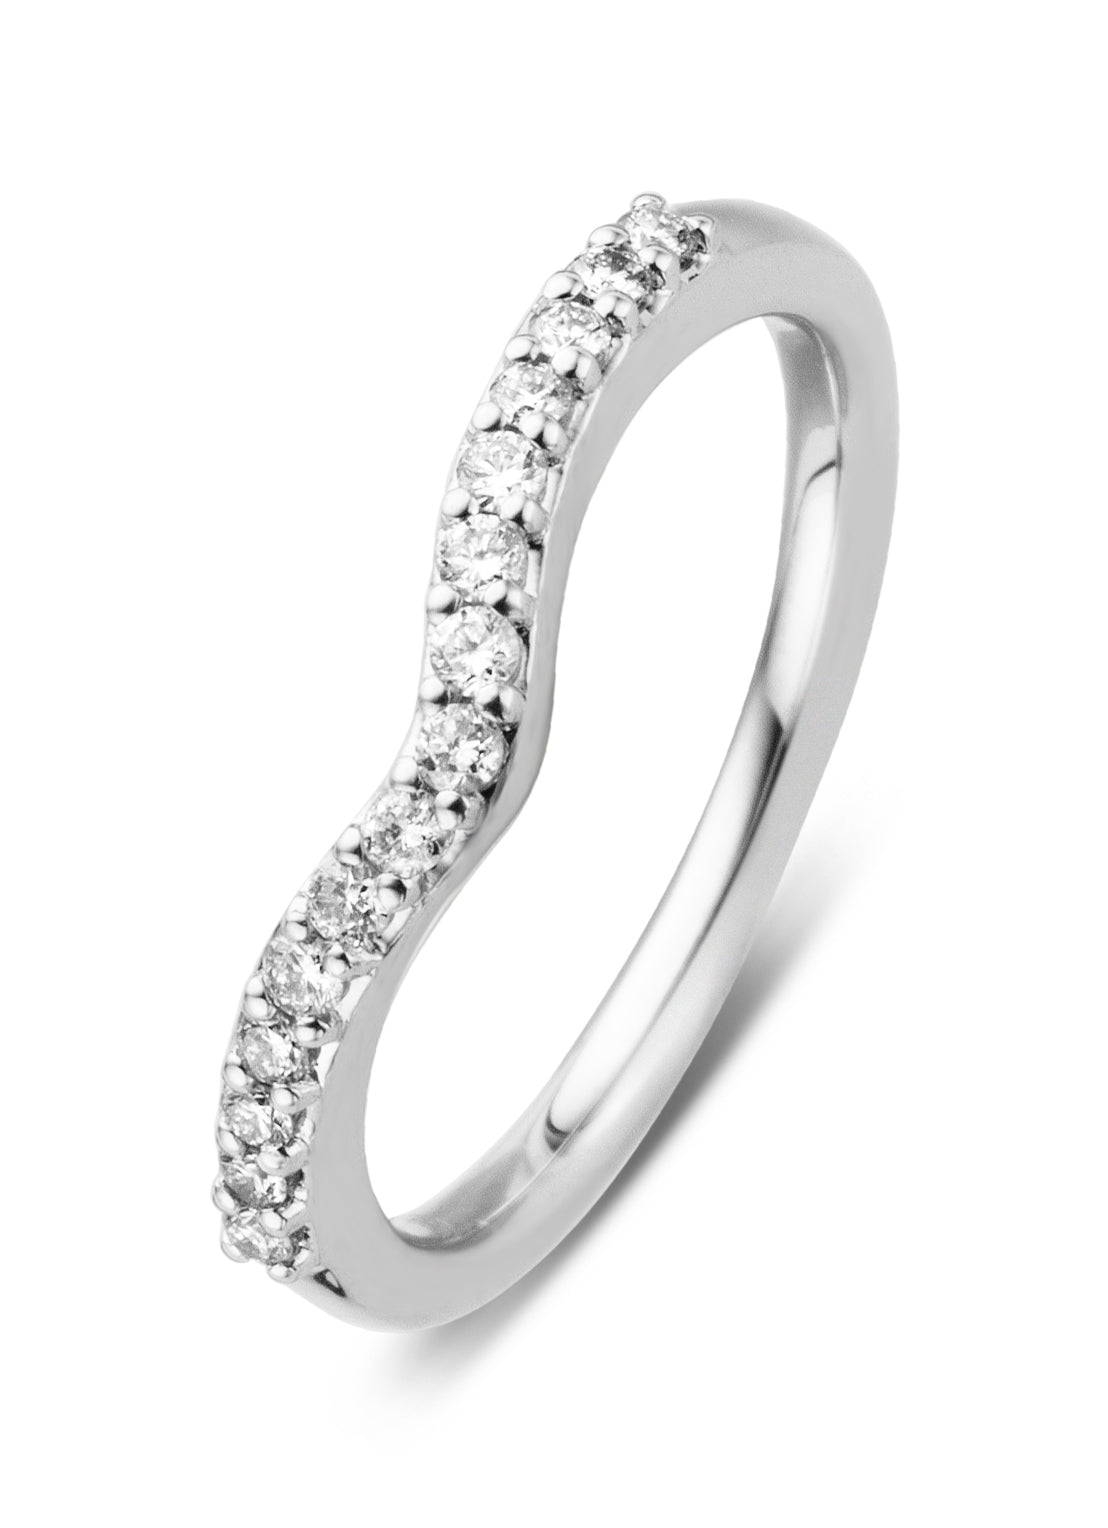 White gold ring, 0.20 ct diamond, wedding